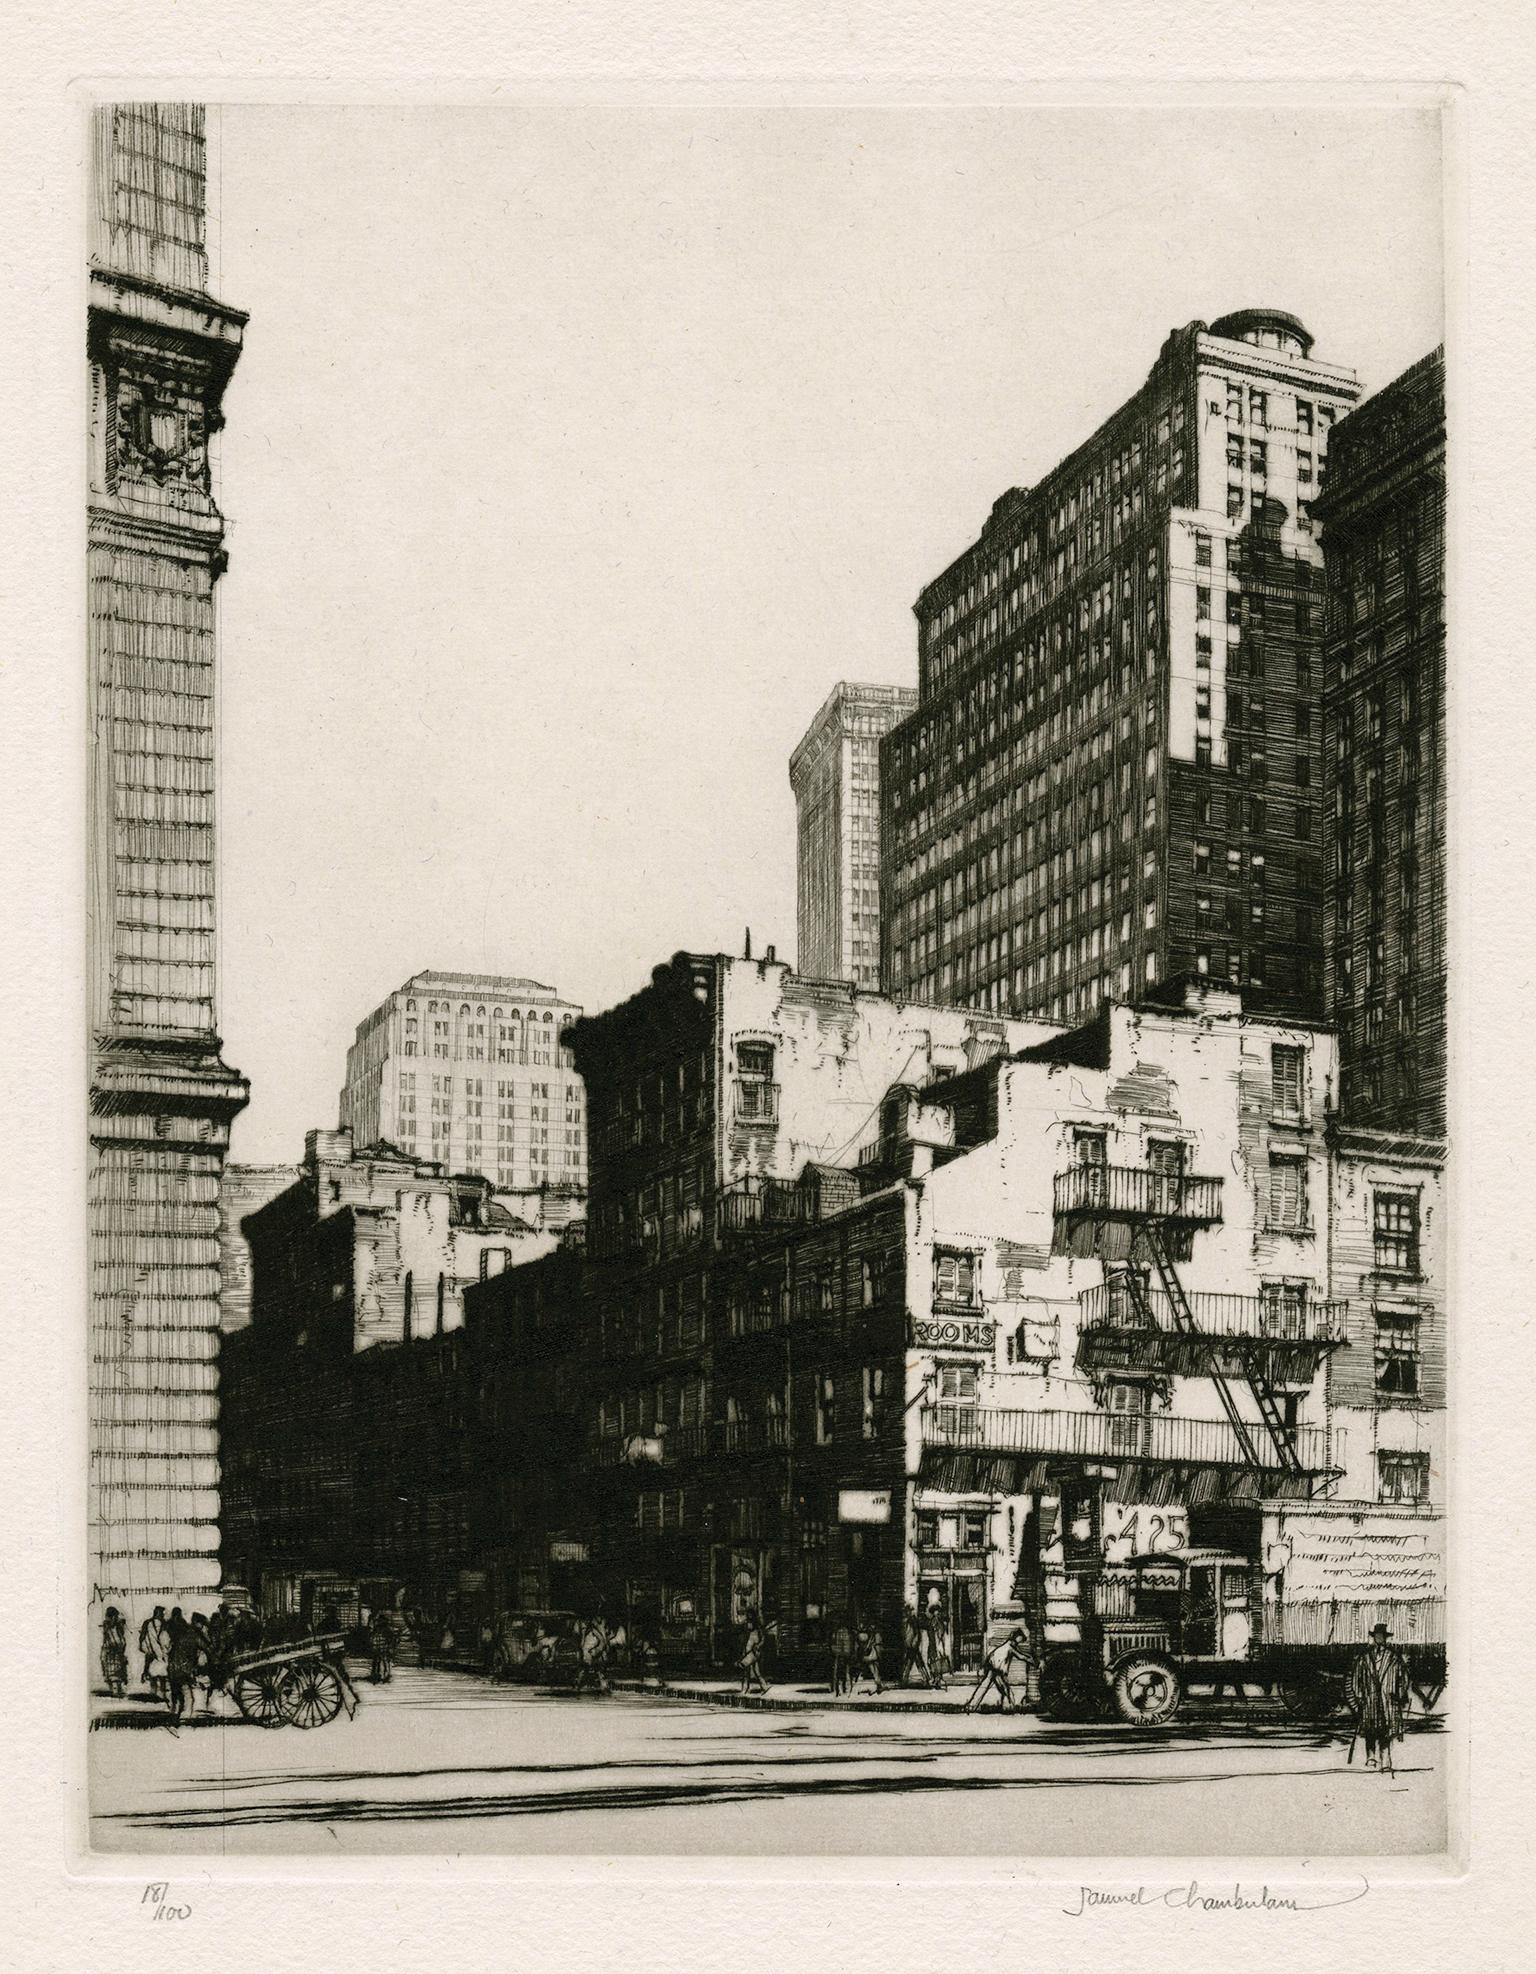 Landscape Print Samuel Chamberlain - Manhattan Old and New' -1920s Réalisme, paysage urbain